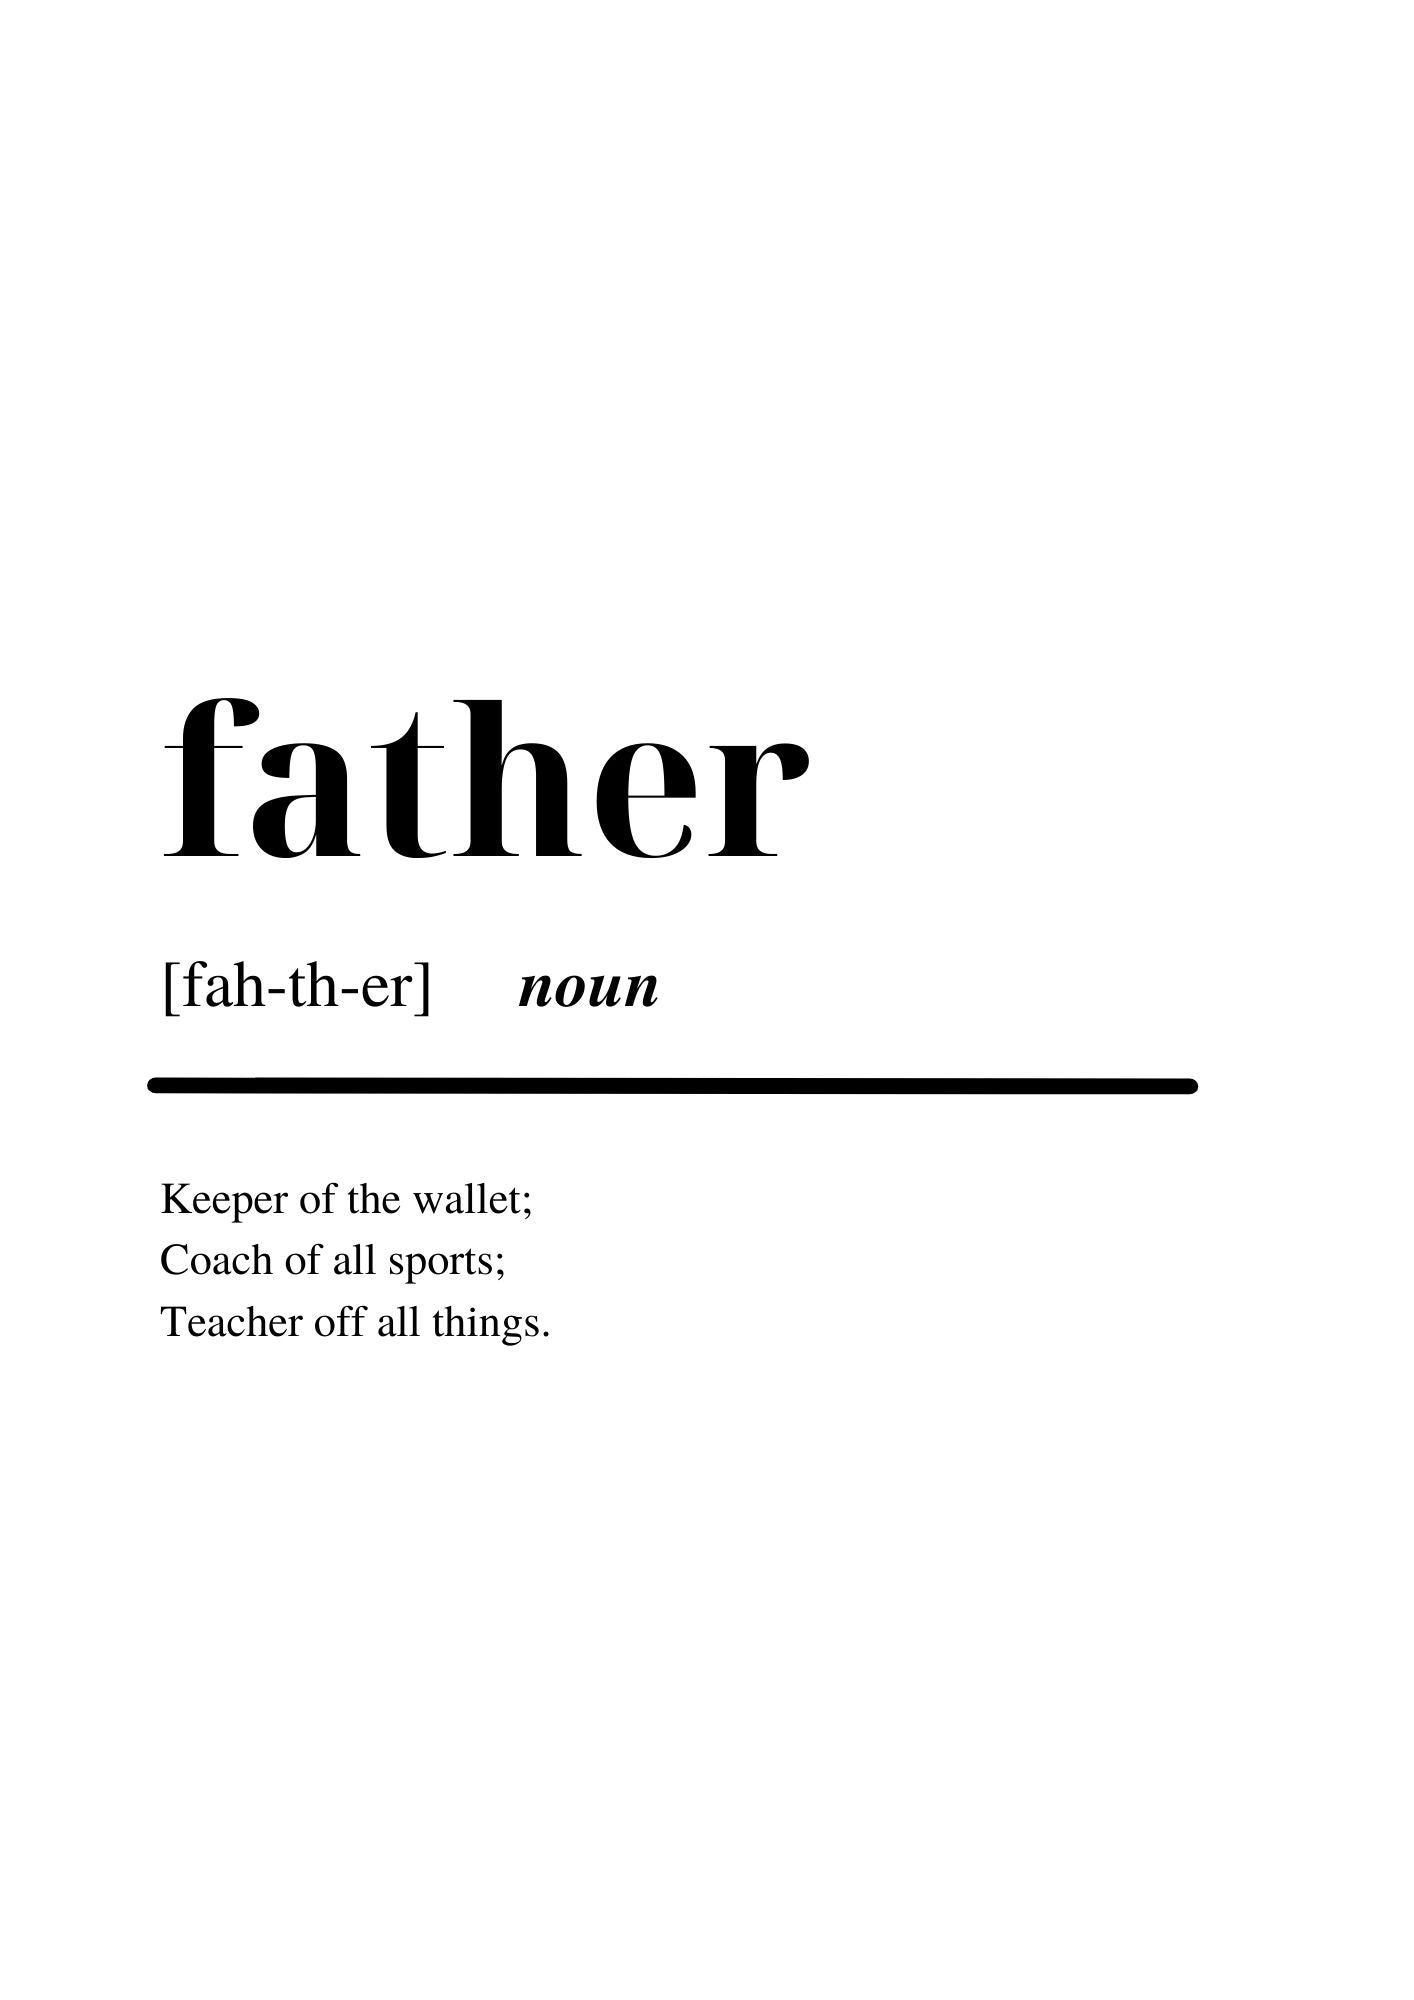 Father noun poster